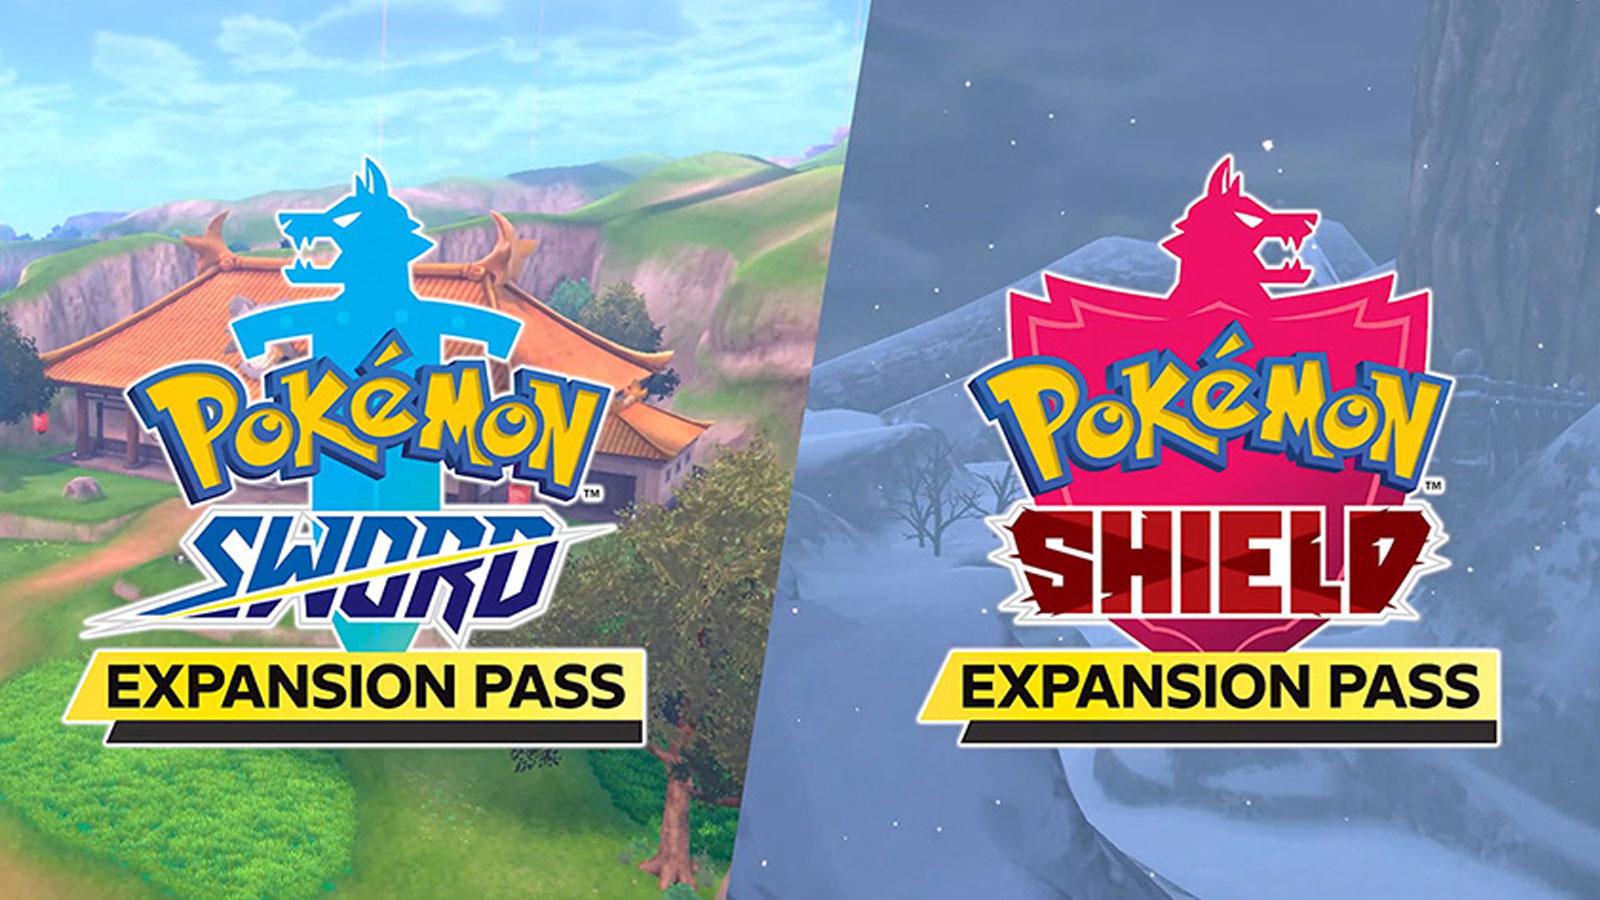  Pokémon Sword Expansion Pass or Pokémon Shield